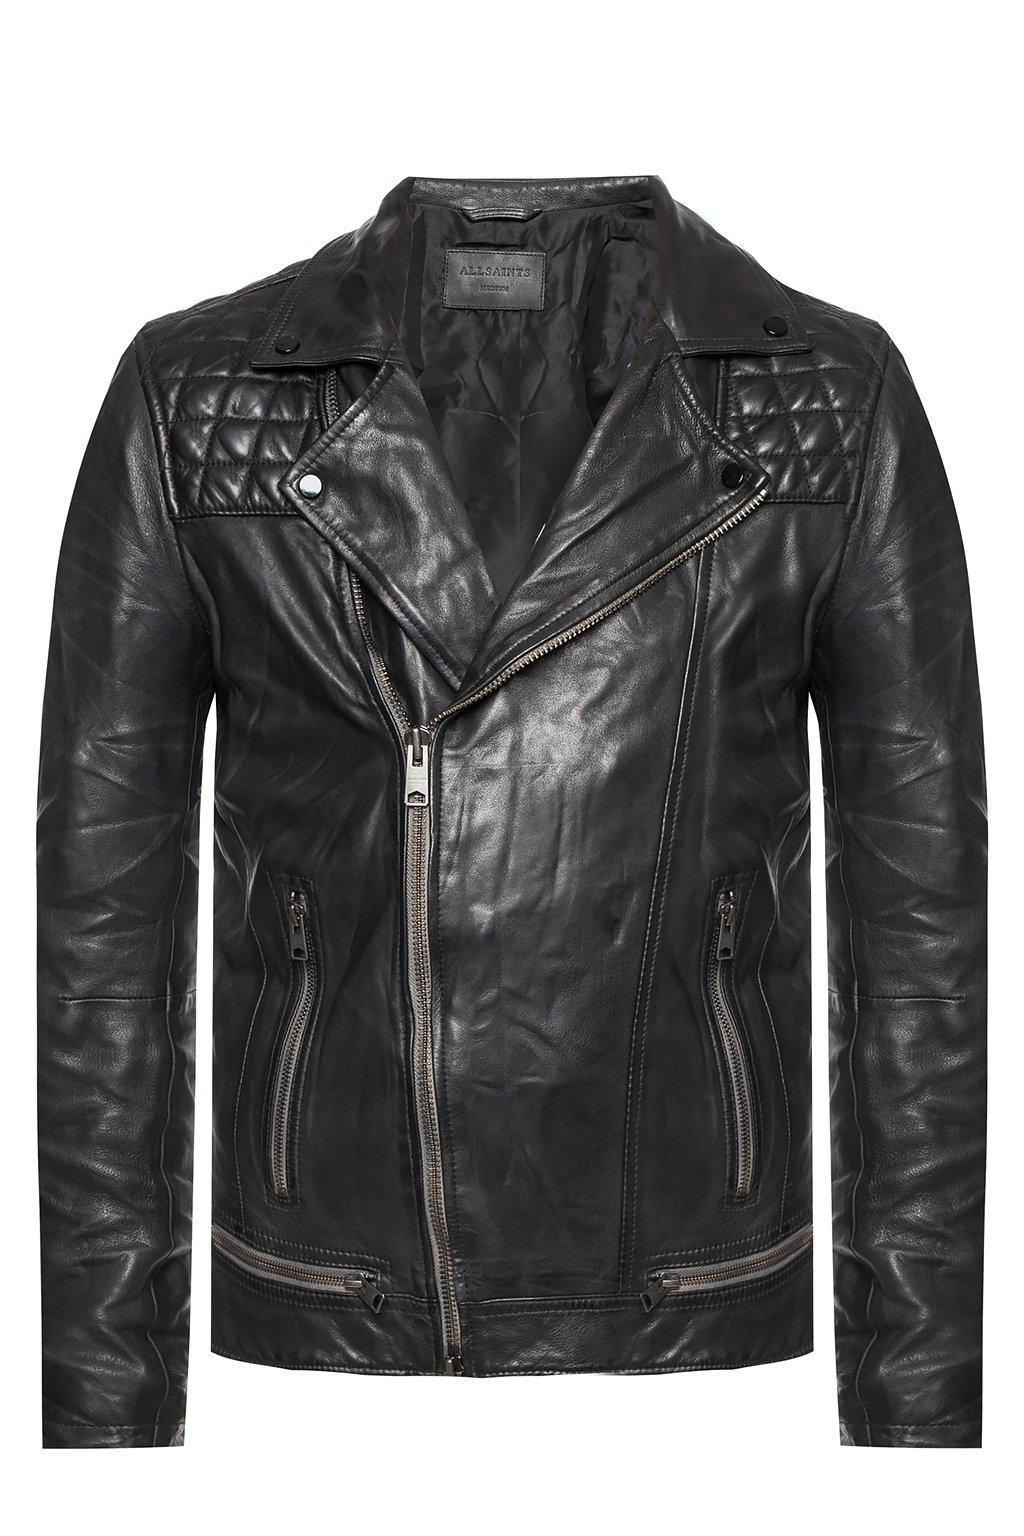 AllSaints 'Conroy' Leather Jacket in Black for Men | Lyst UK